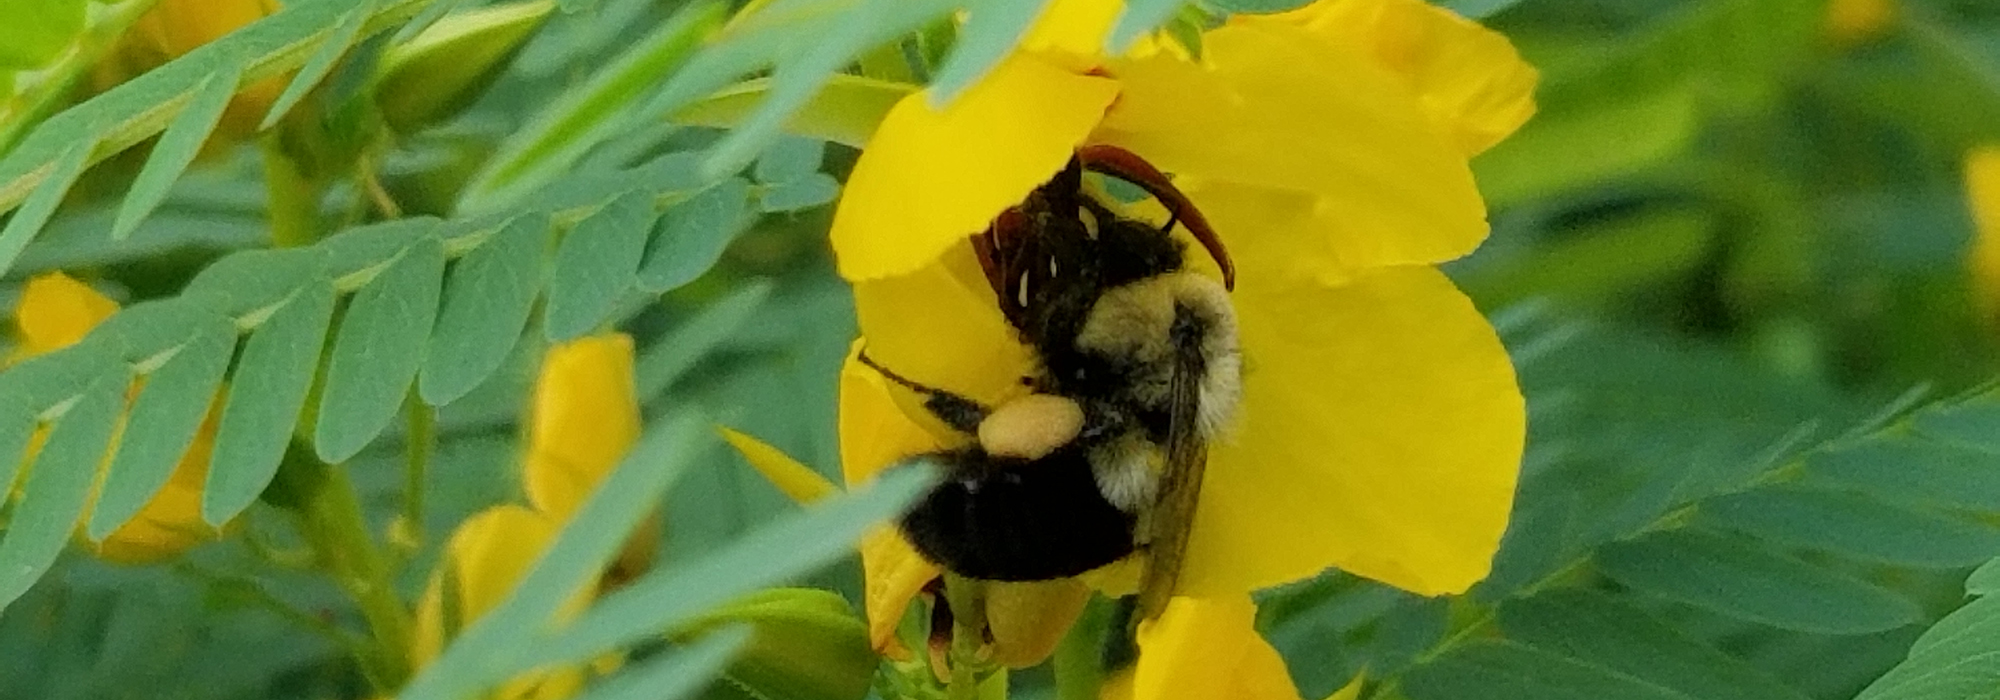 Bee climbing into a flower's petals